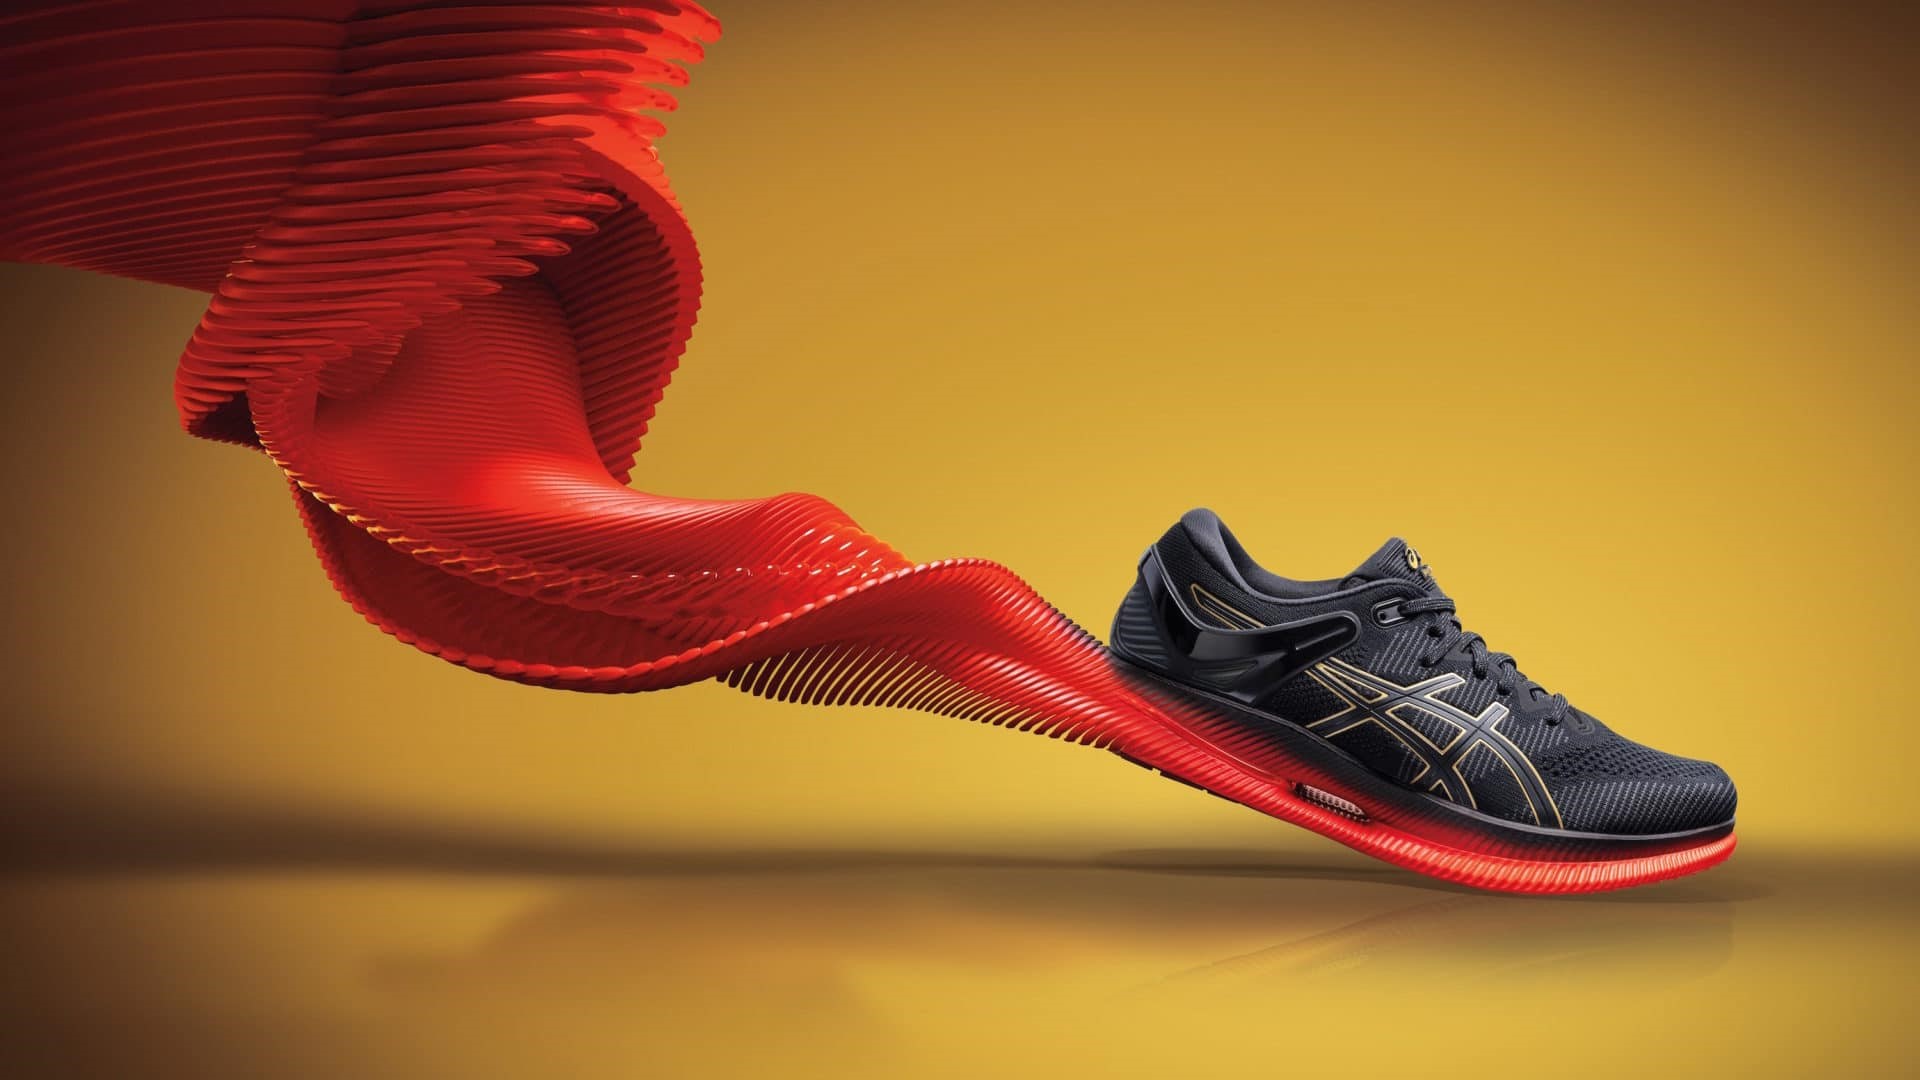 Highest 5 Carbon Fleece Running Shoes of 2022